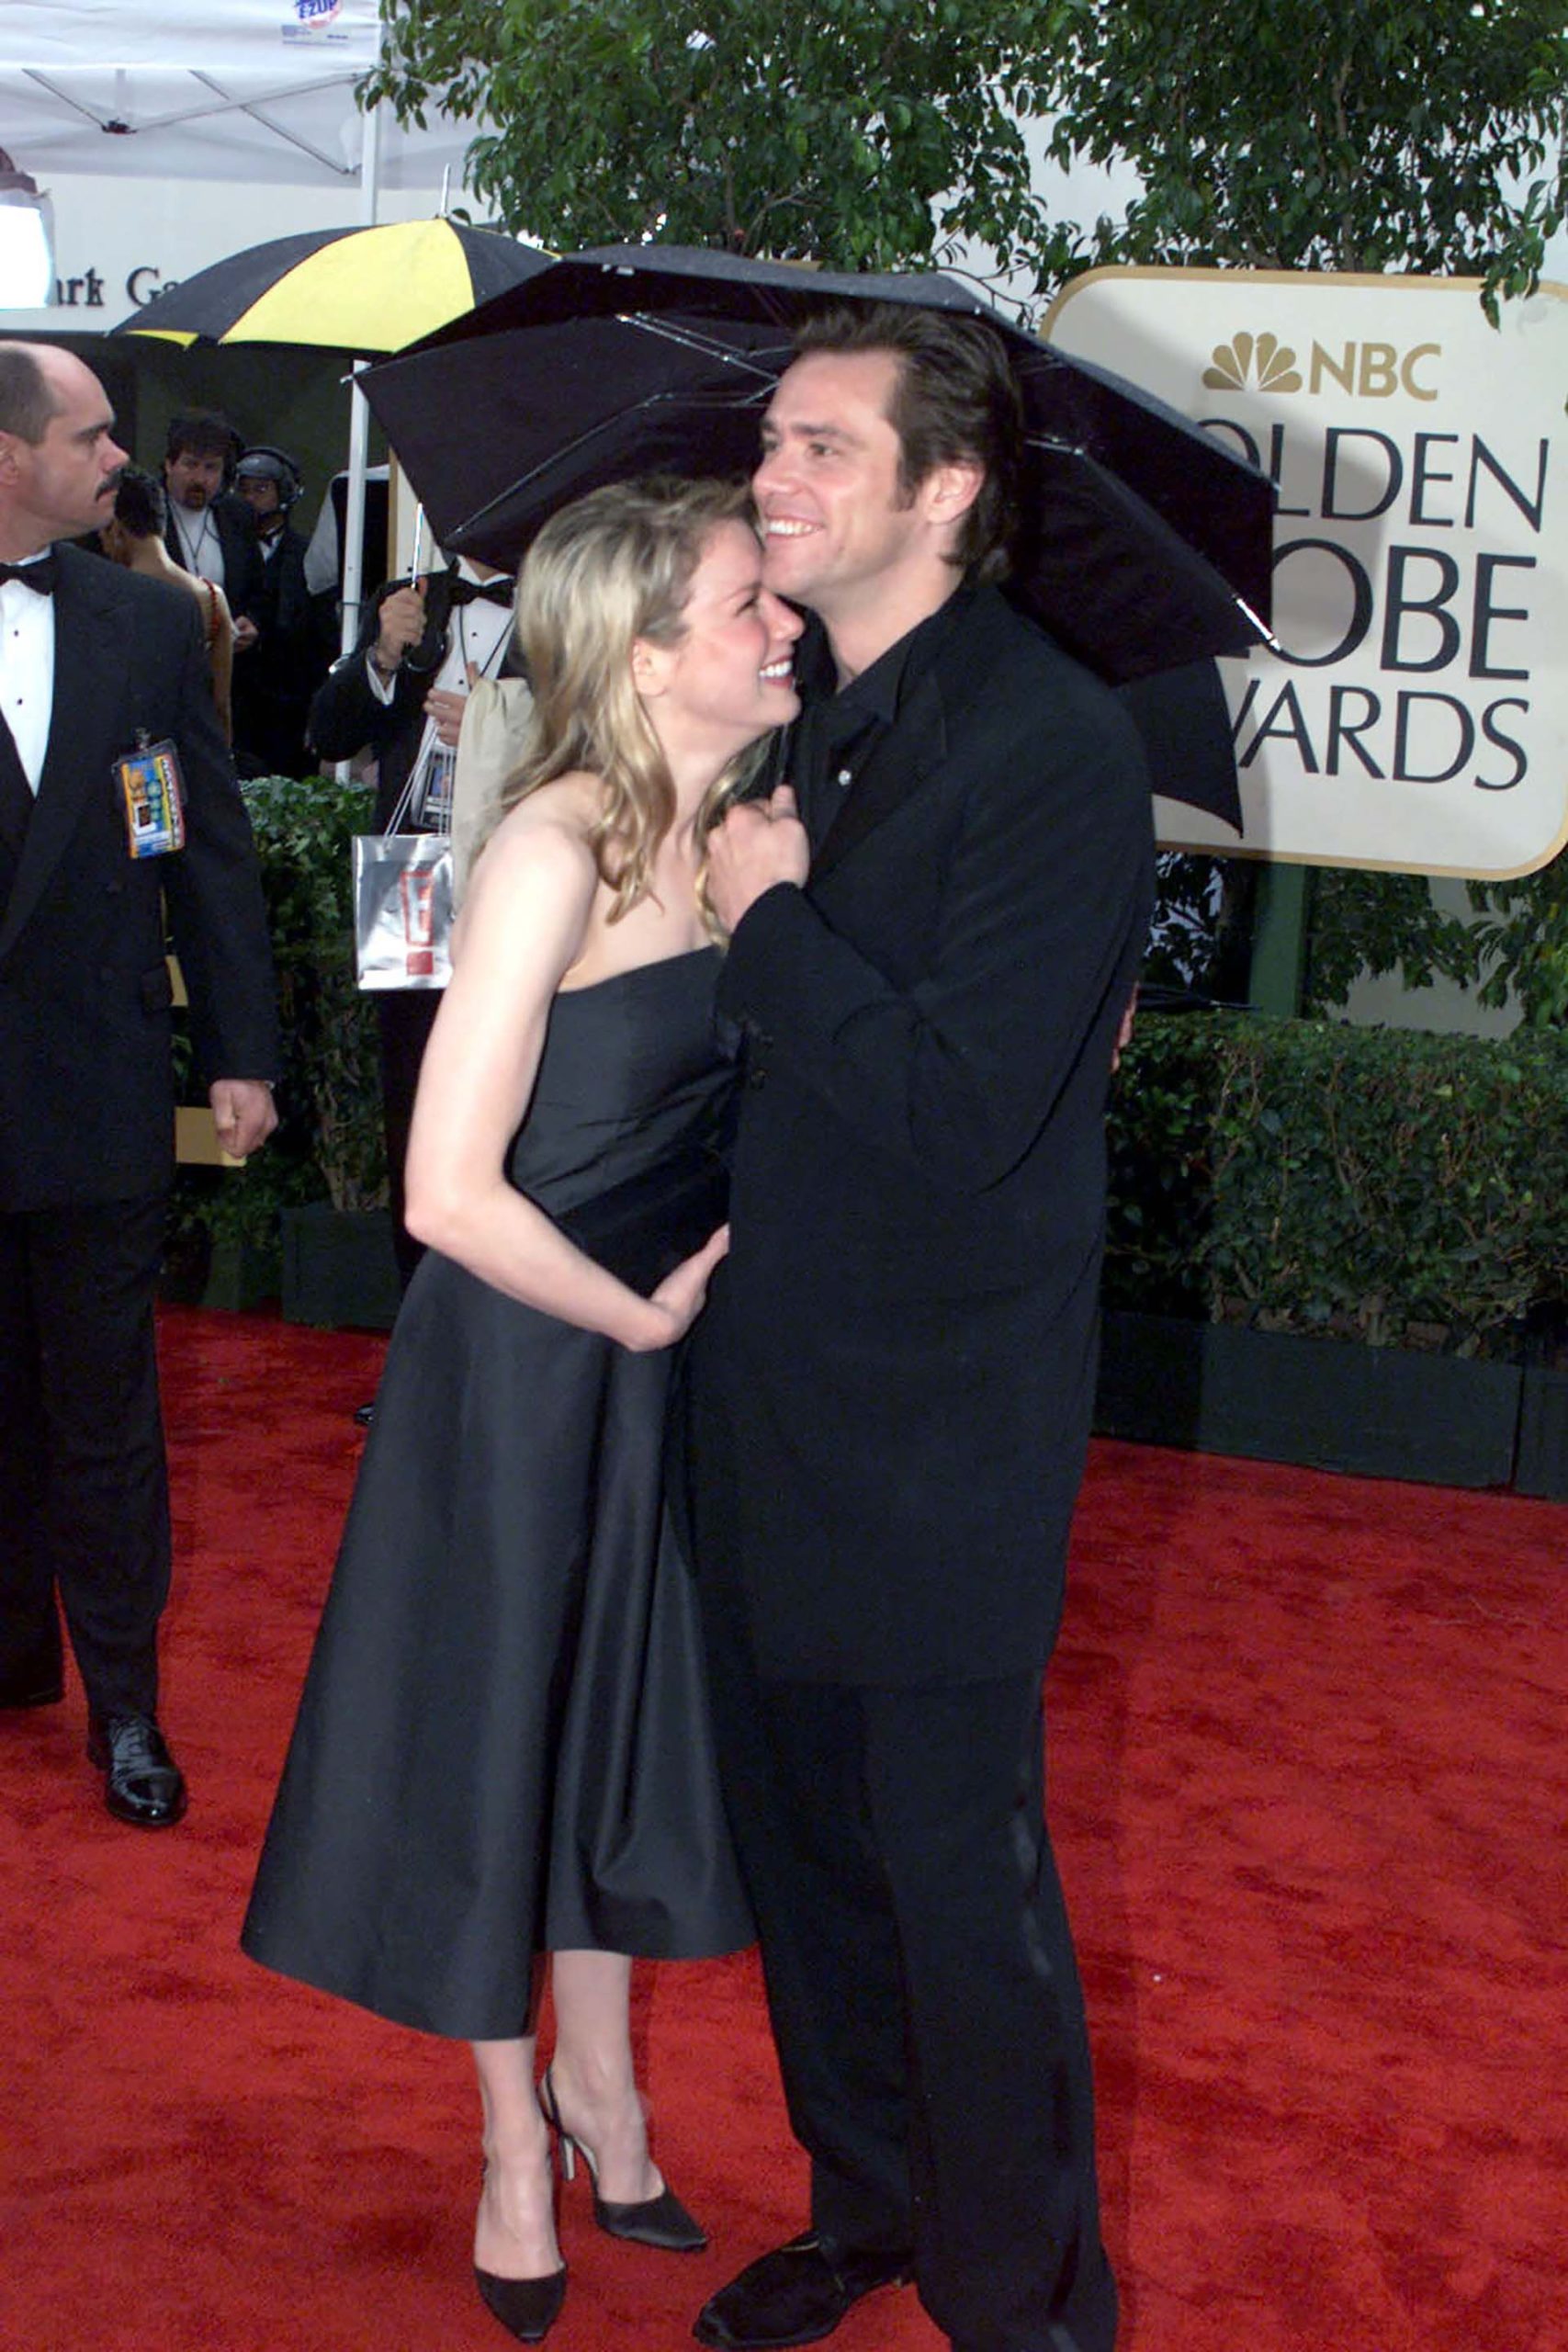 Jim Carrey reconoció que su ex novia Renée Zellweger fue "el amor de mi vida" (Shutterstock)